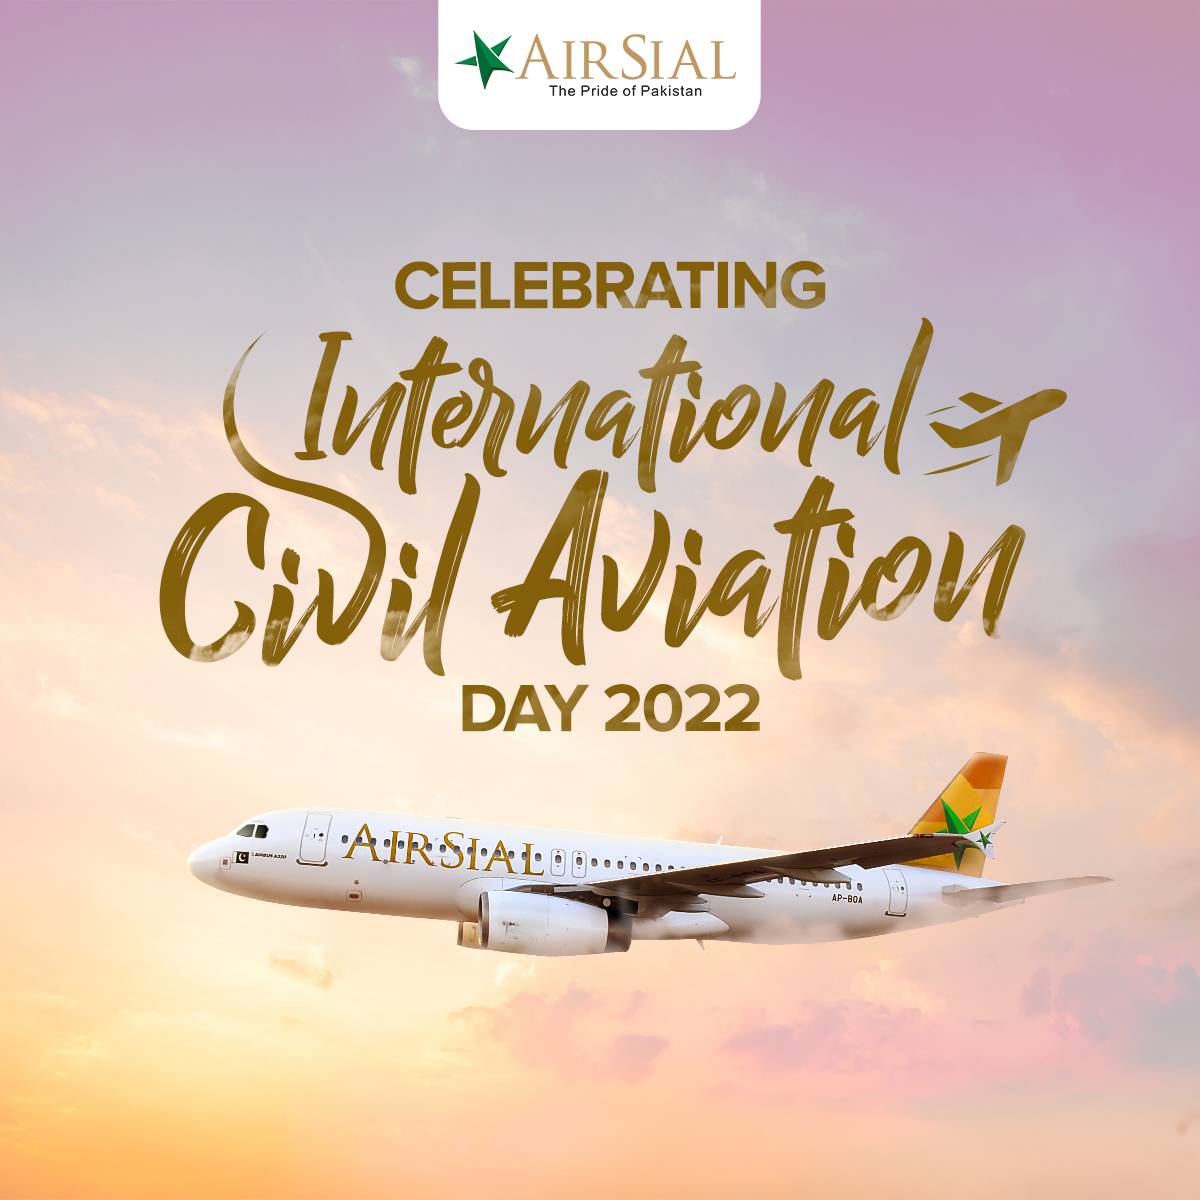 Celebrating #InternationalCivilAviationDay 2022 ✈️
#AirSial - The Pride of #Pakistan